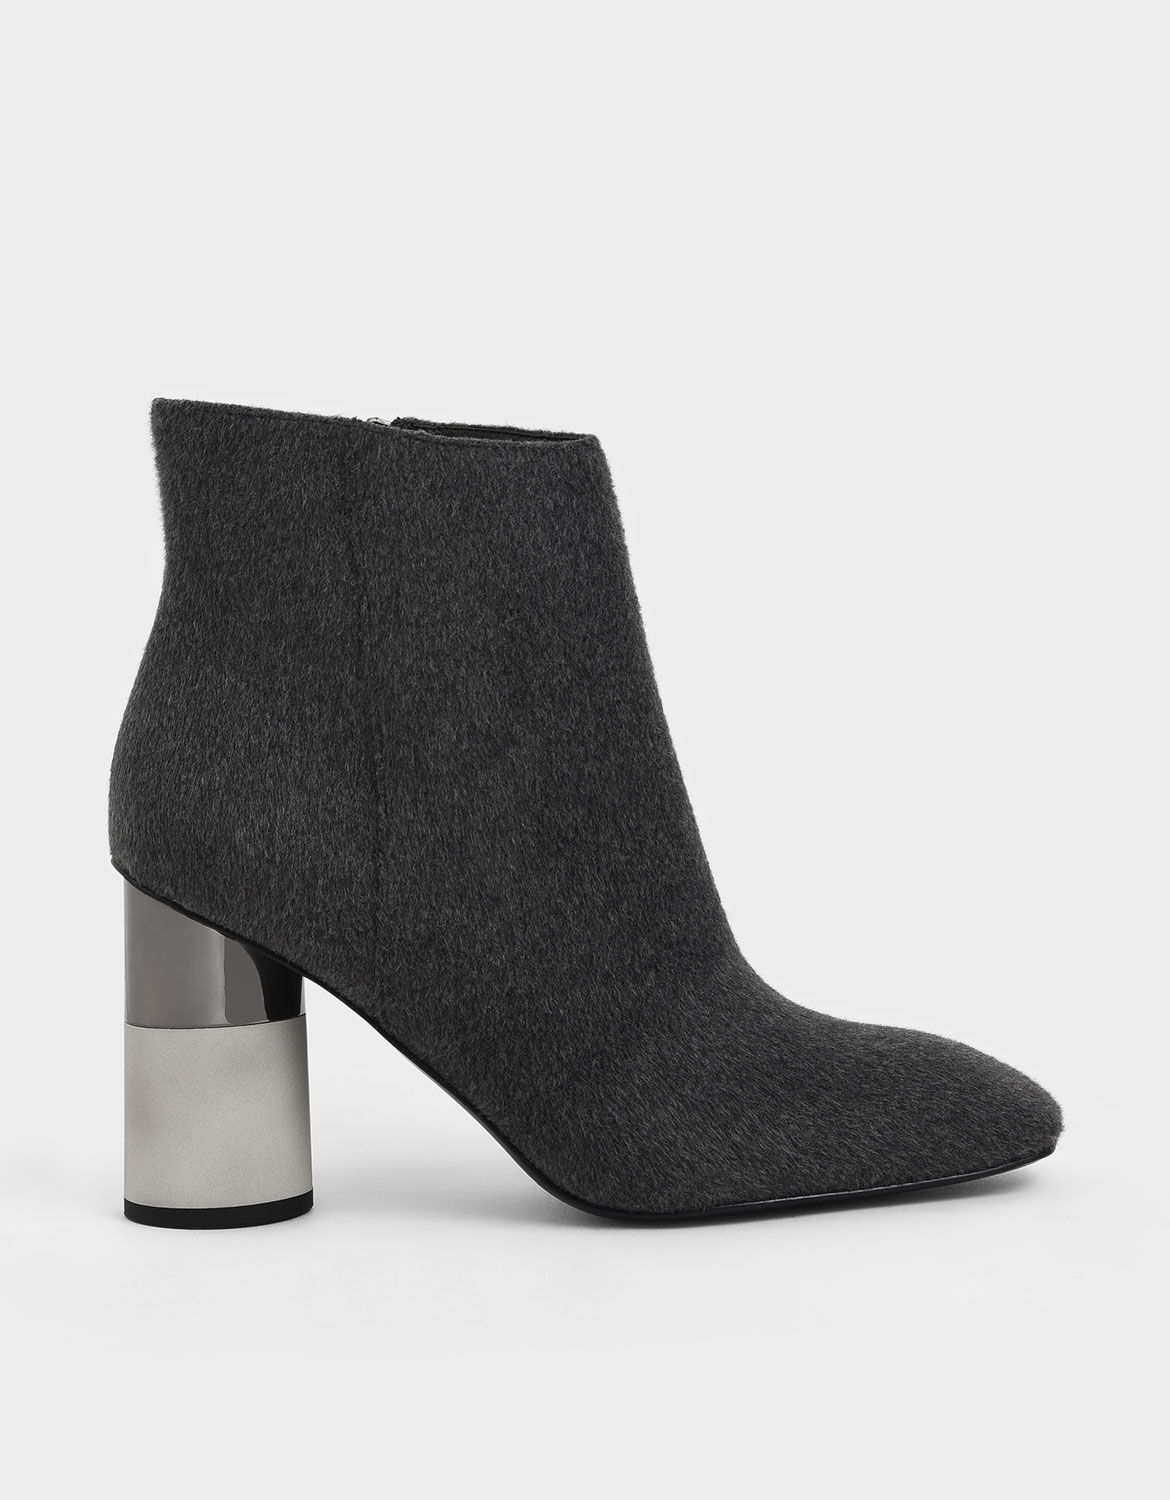 dark grey ankle boots uk